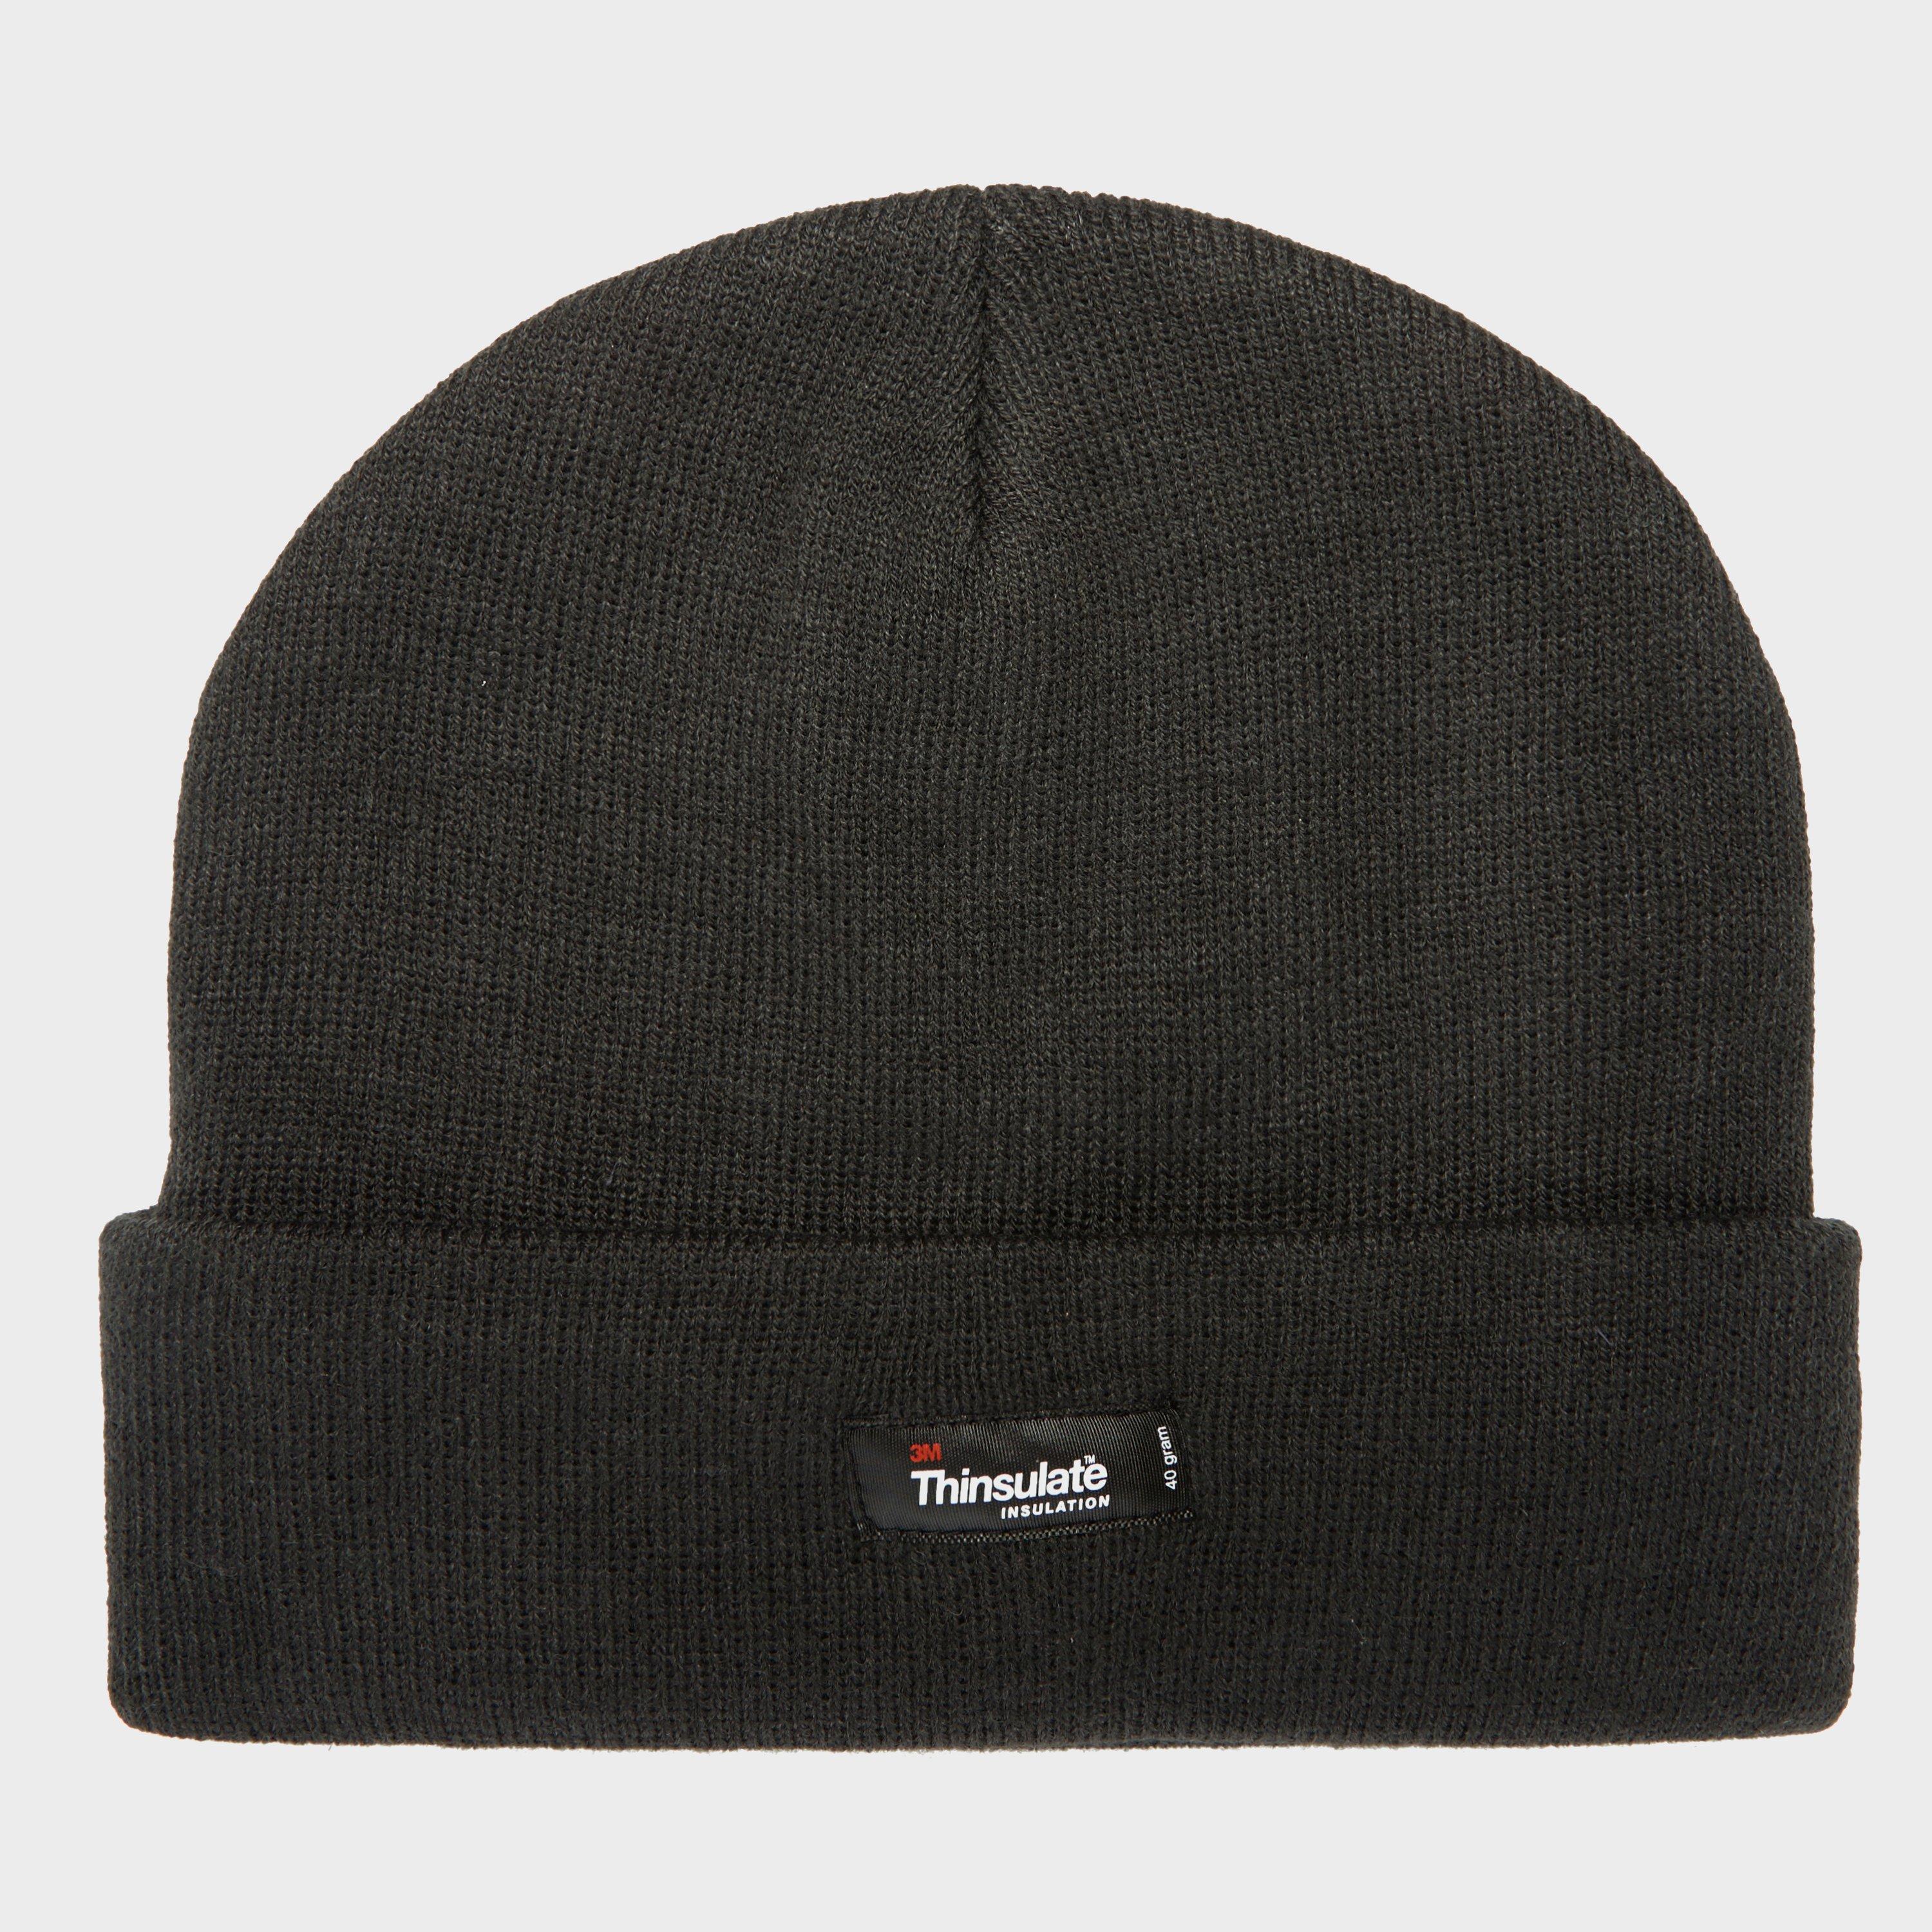 Peter Storm Unisex Thinsulate Beanie Hat  Grey